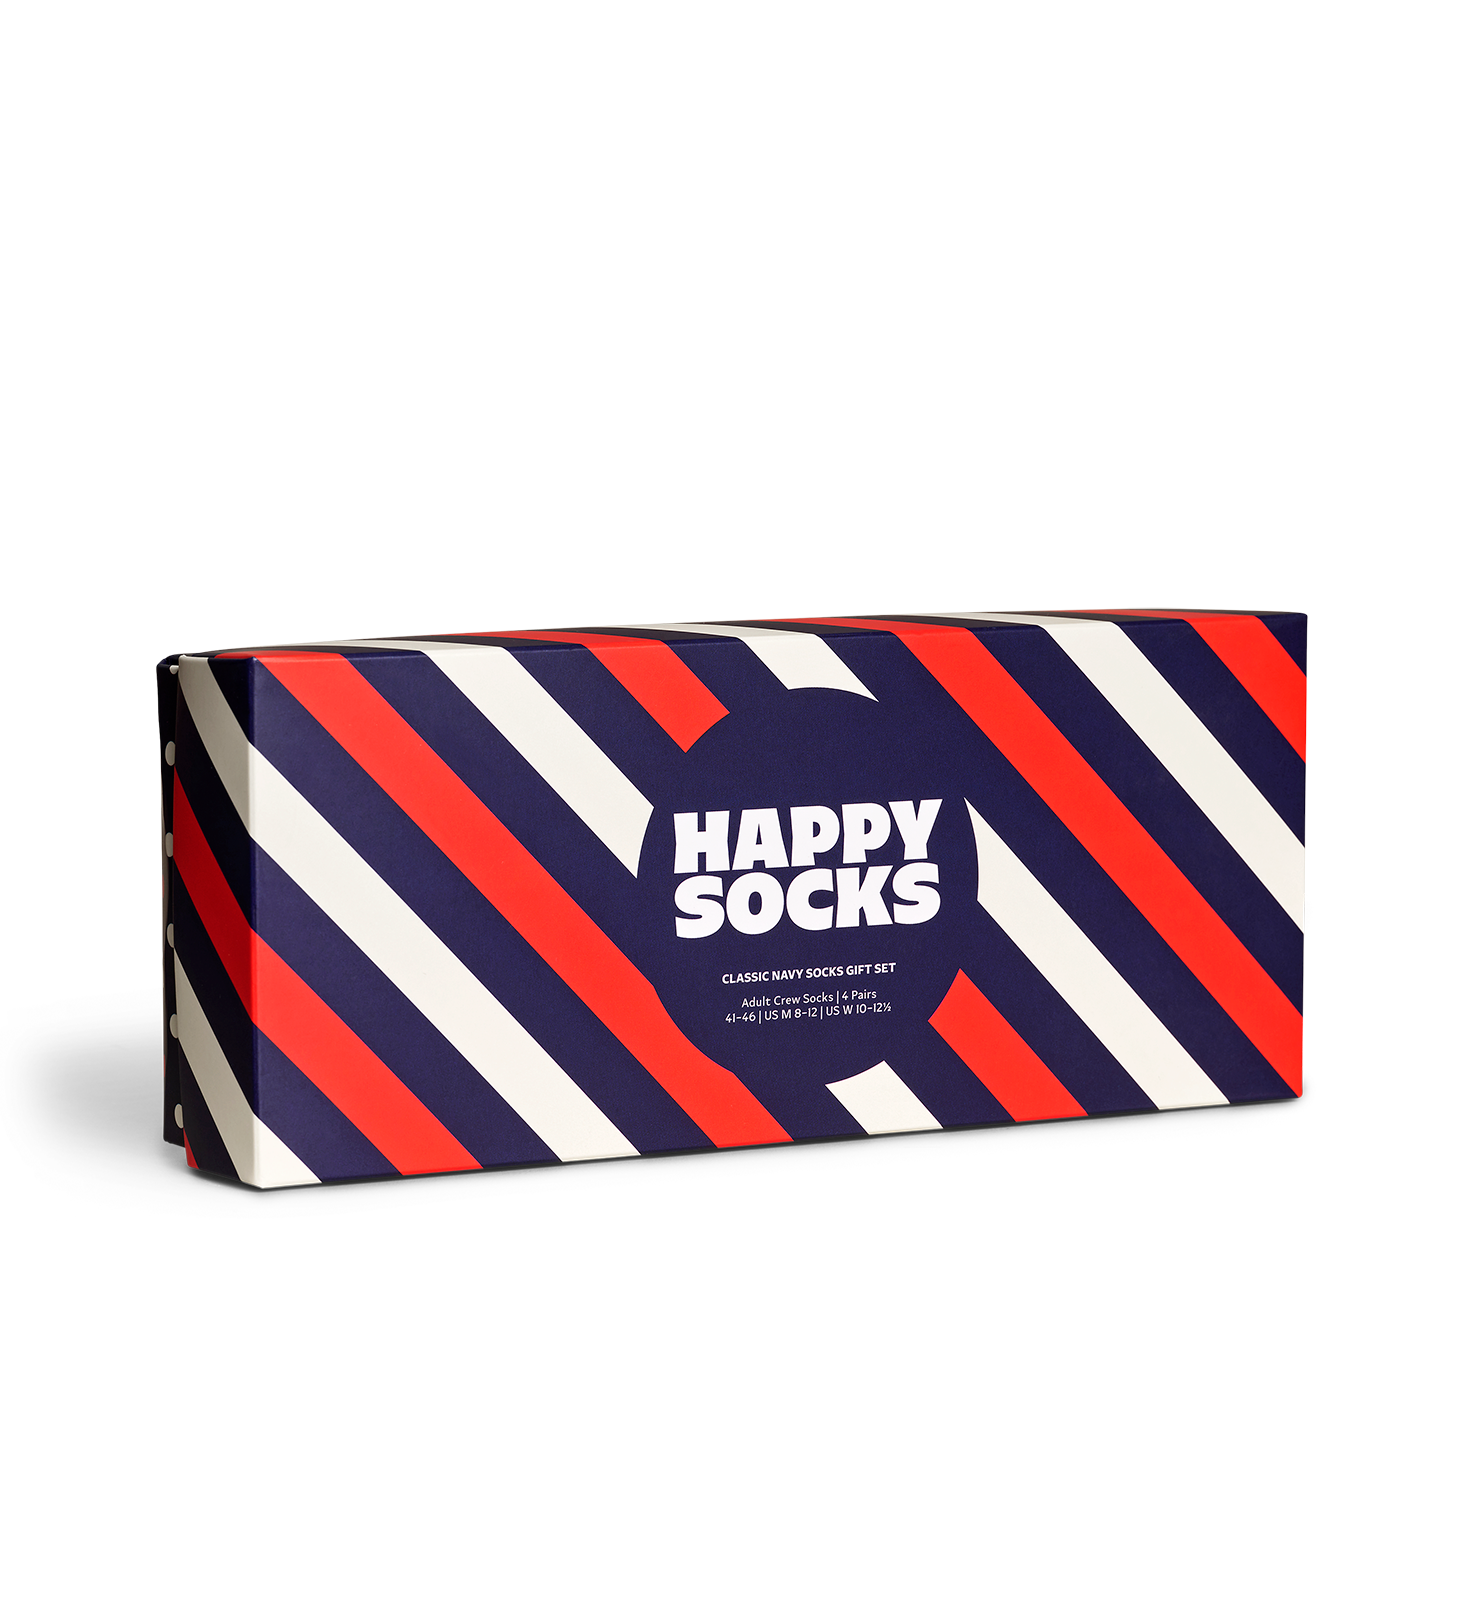 4-Pack Classic Navy Crew Socks | Set Happy Socks Gift US